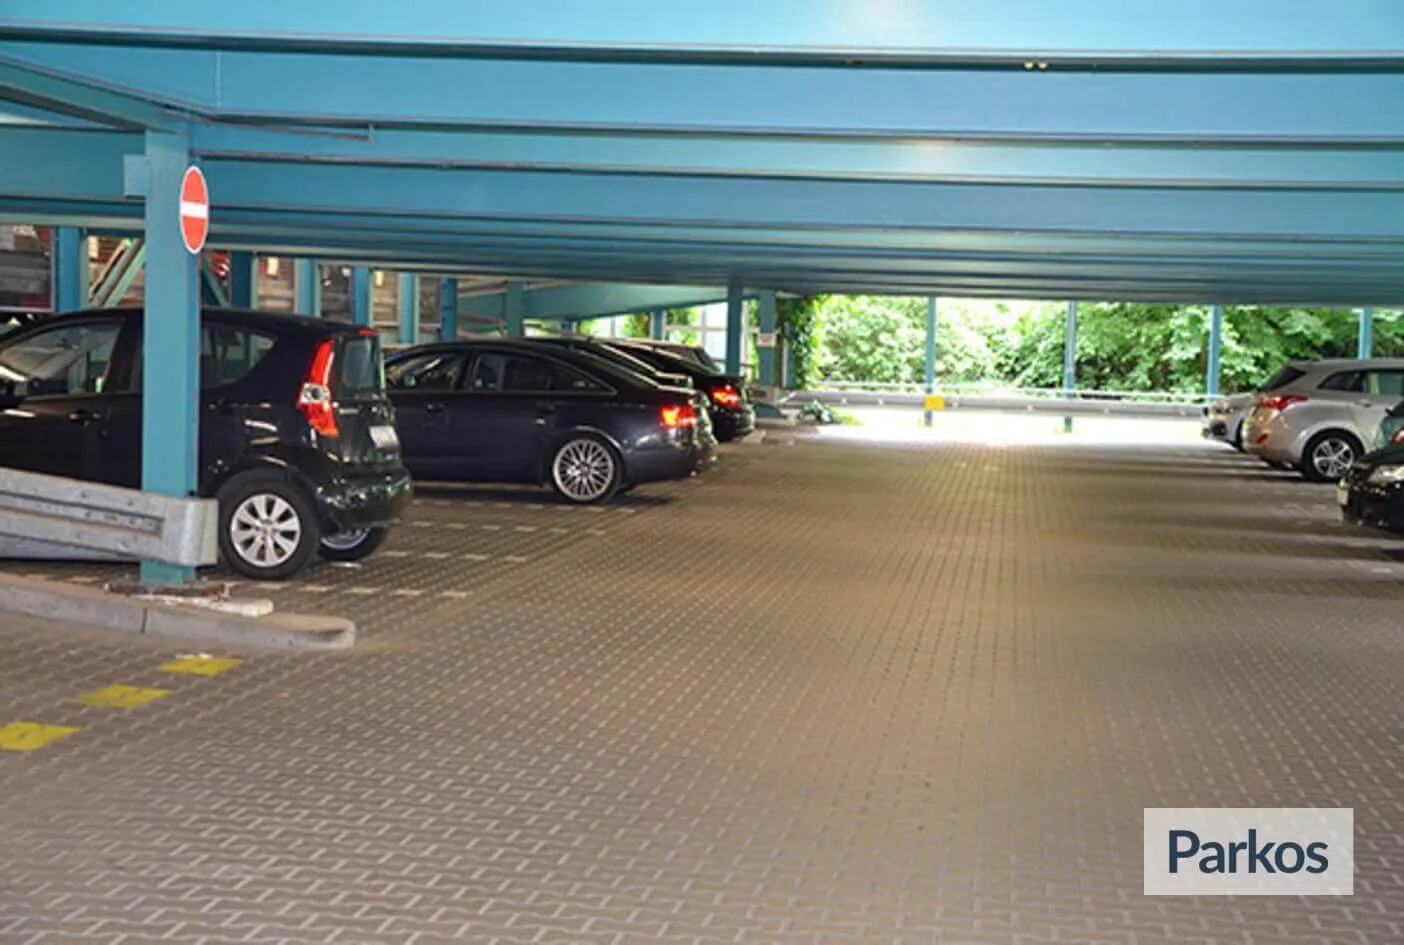 Mainparkhaus Frankfurt - Frankfurt Airport Parking - picture 1